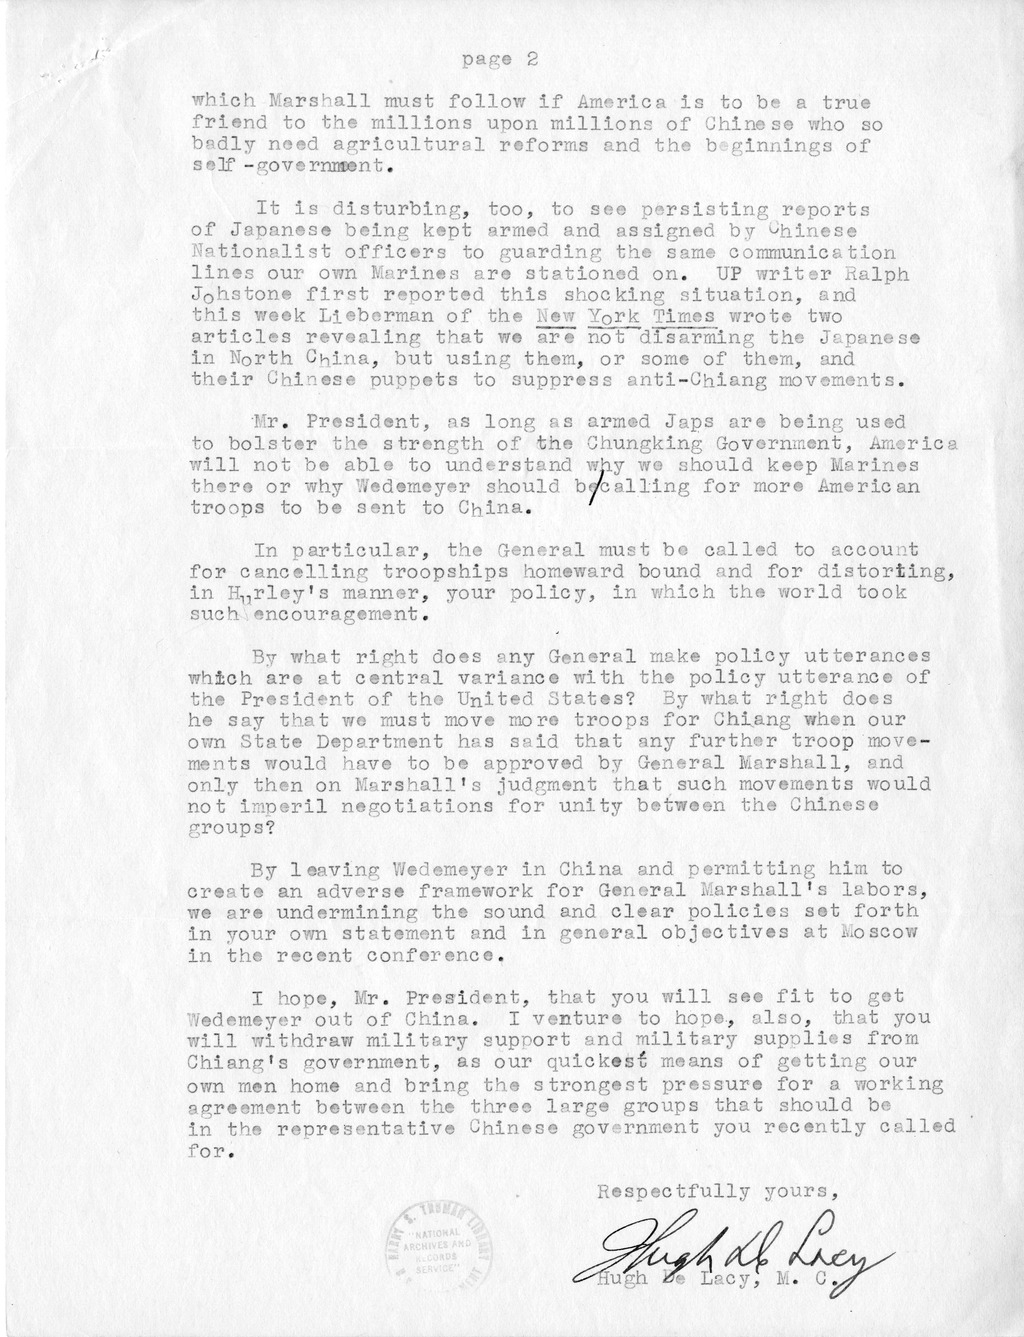 Correspondence from Representative Hugh DeLacy to President Harry S. Truman